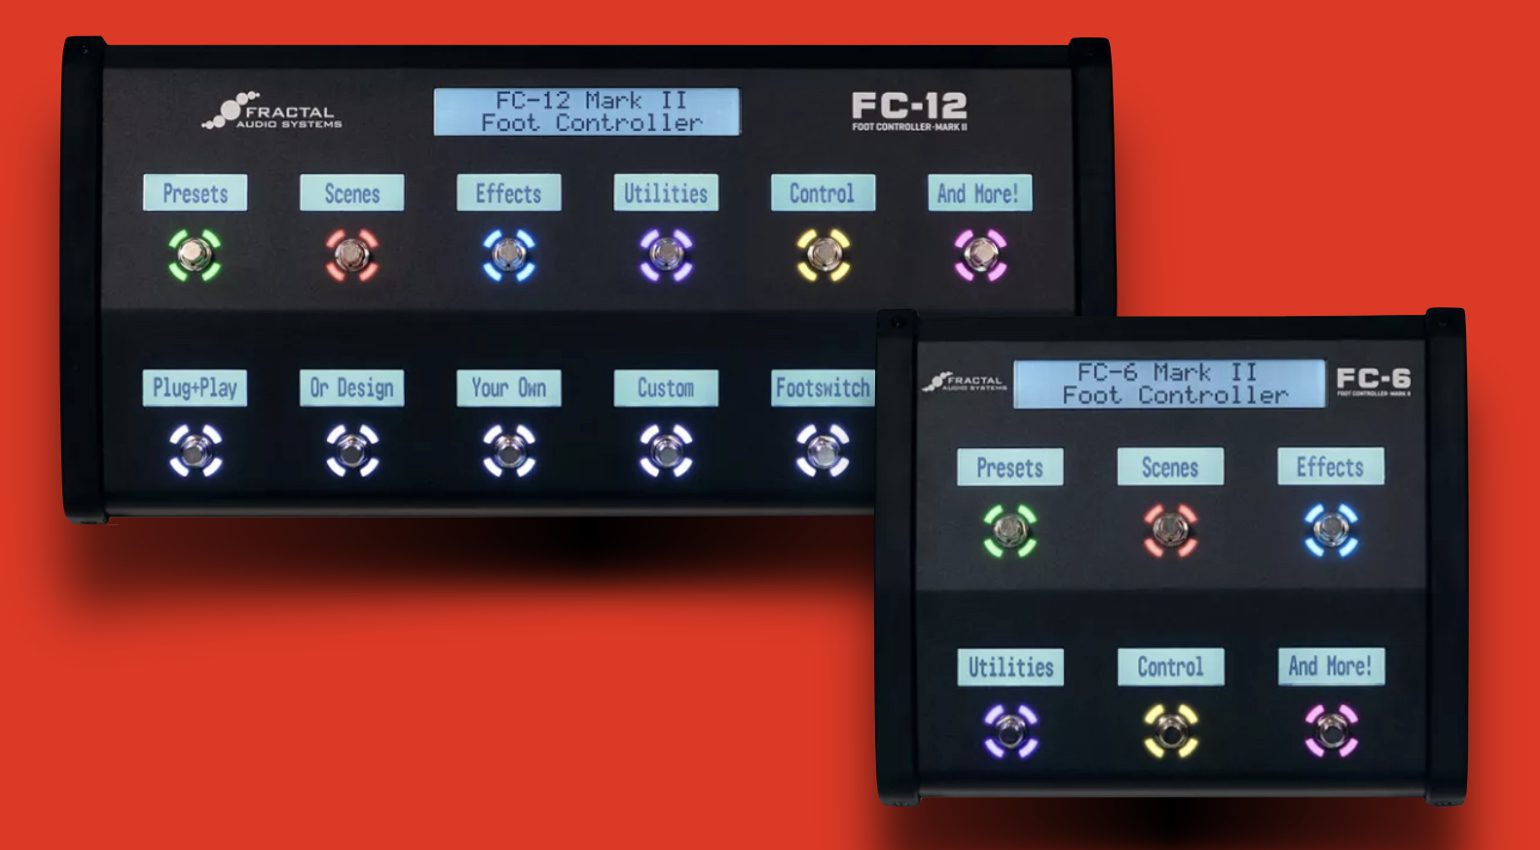 Fractal Audio 发布带迷你显示屏的FC-6 和FC-12 Mark II 踏板控制器